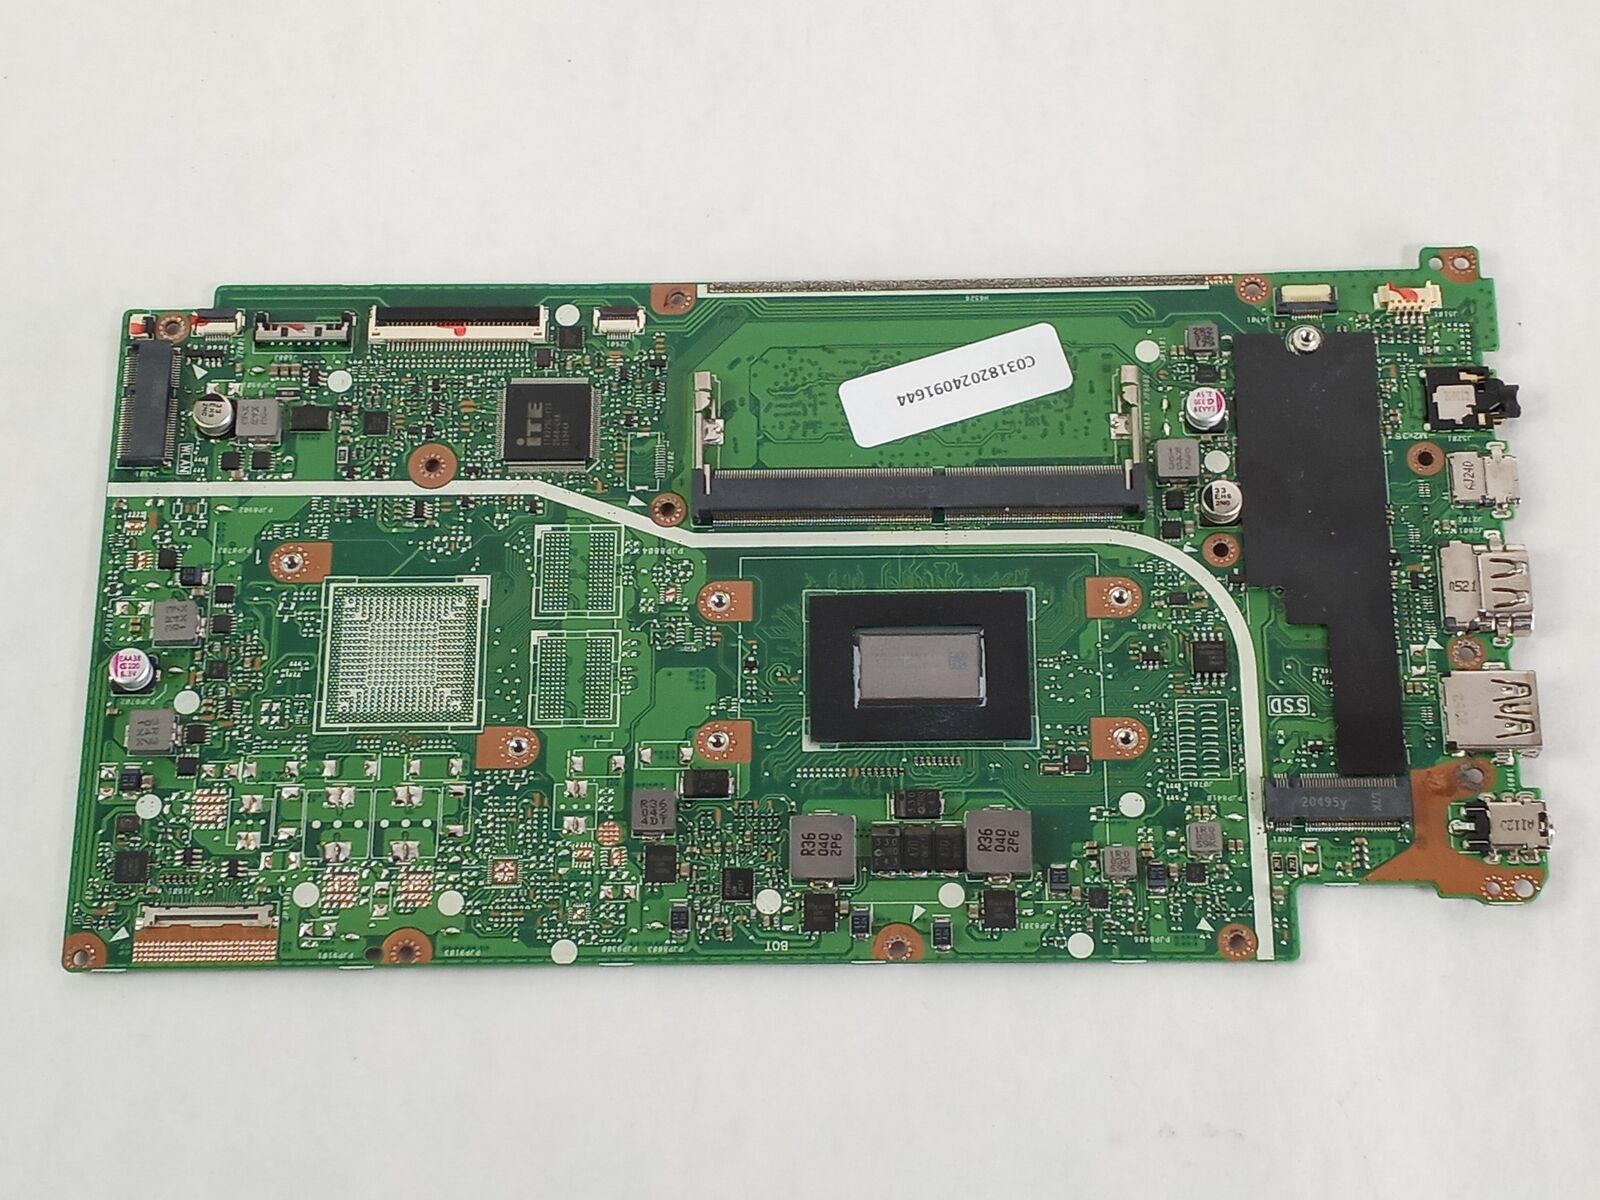 Lot of 2 Asus Vivobook 15 X512DA Ryzen 5 3500U 2.10 GHz 8 GB DDR4 Motherboard